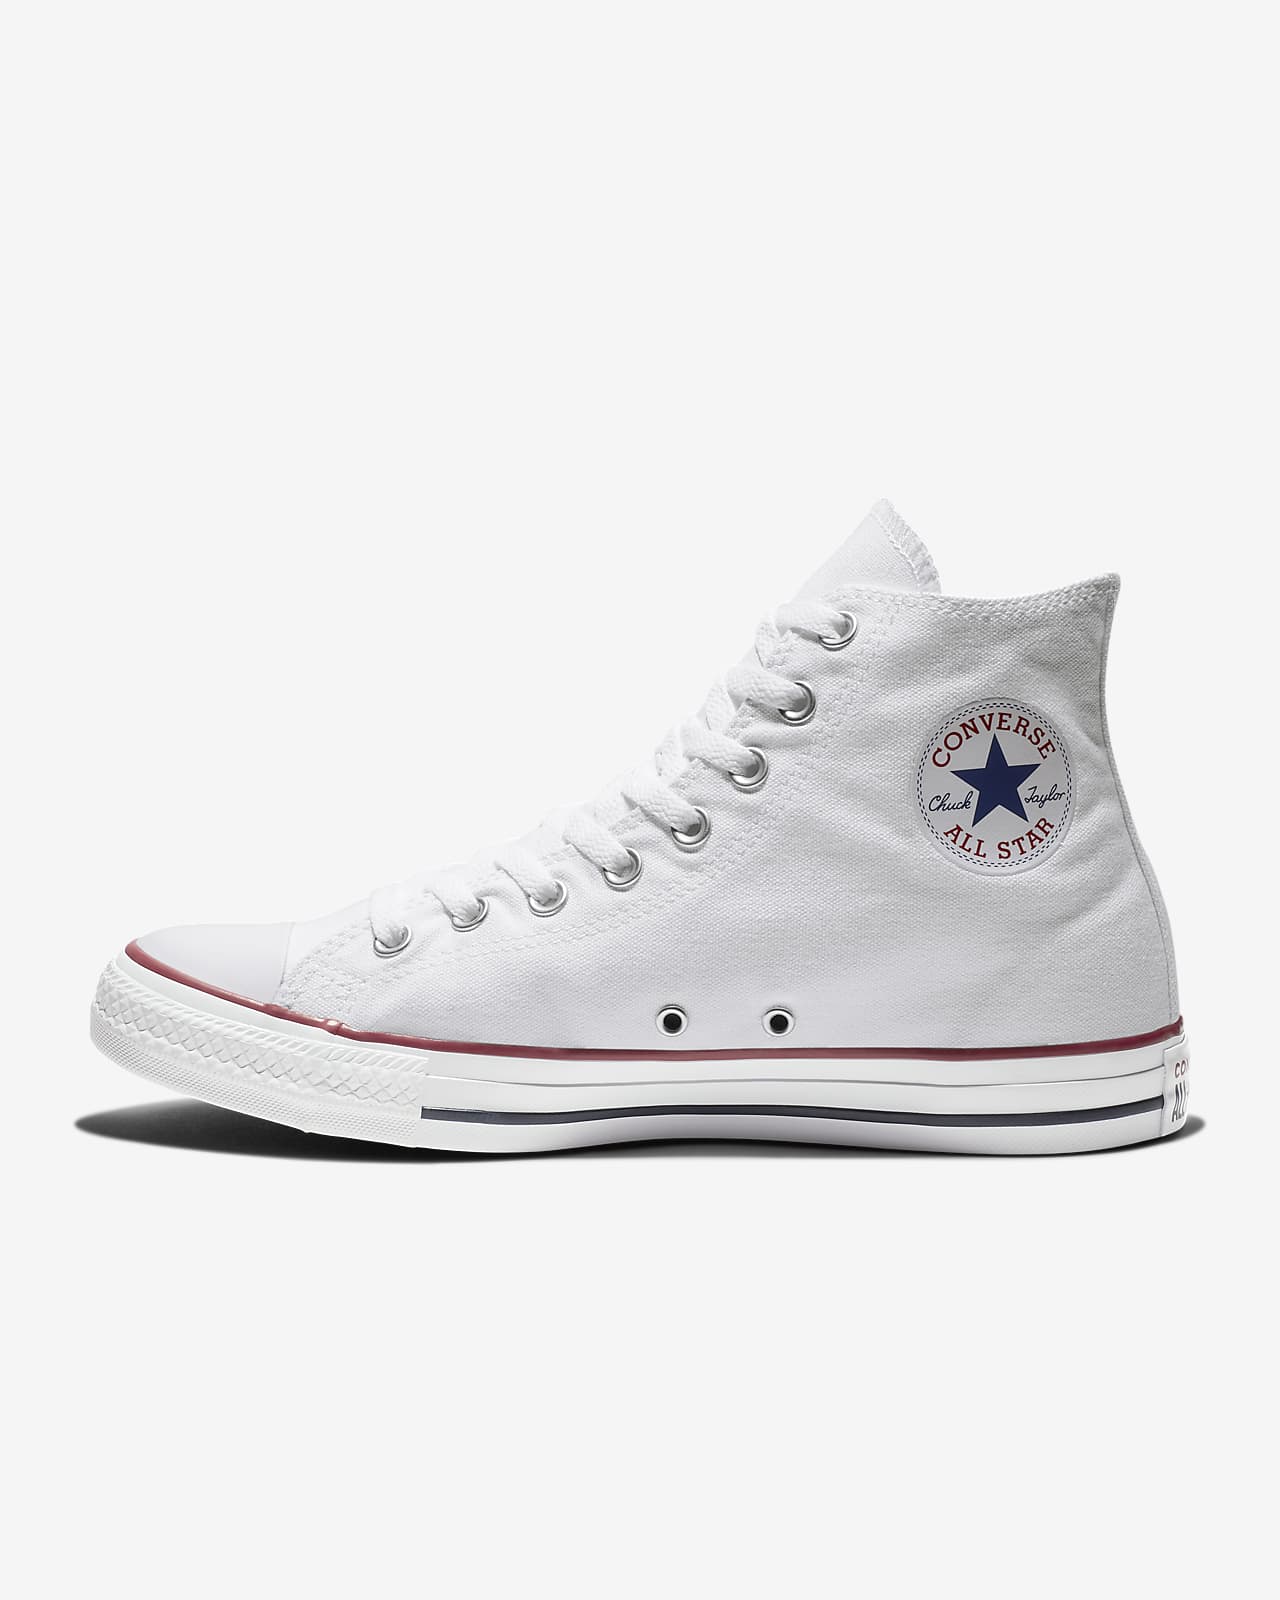 Converse Chuck Taylor All Star High Top Unisex Shoe